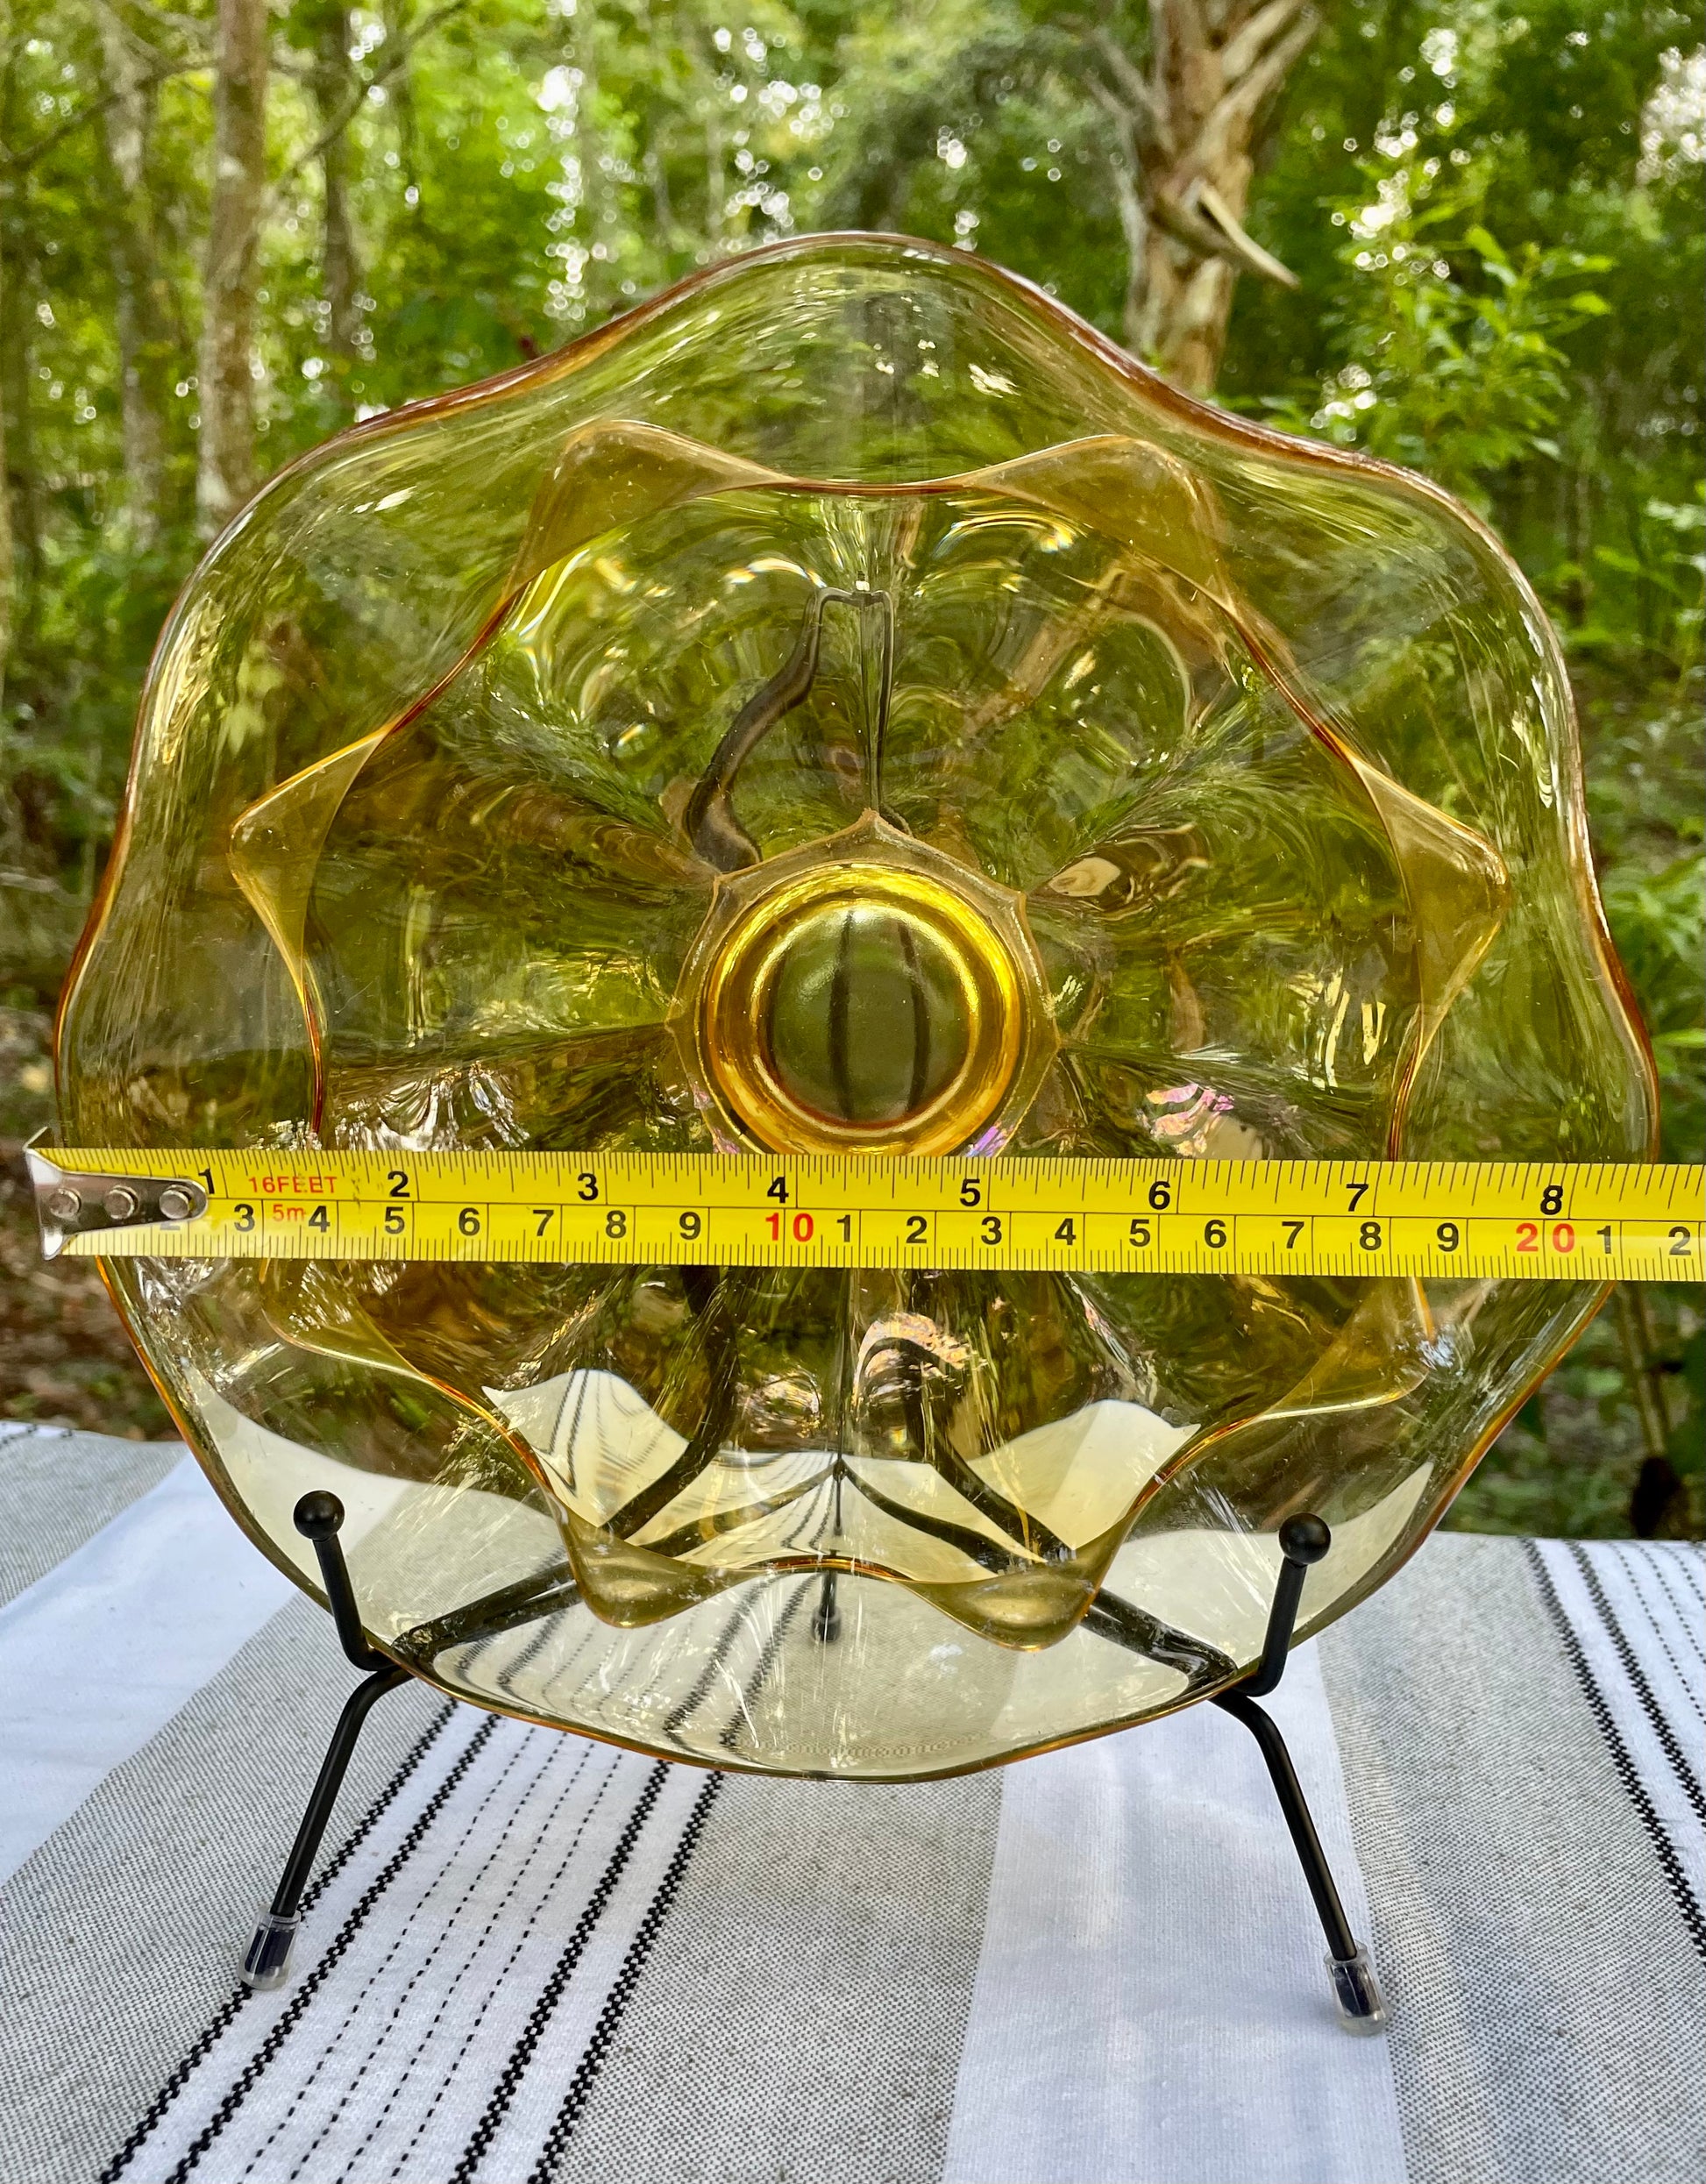 F228 Large Glass Bowl